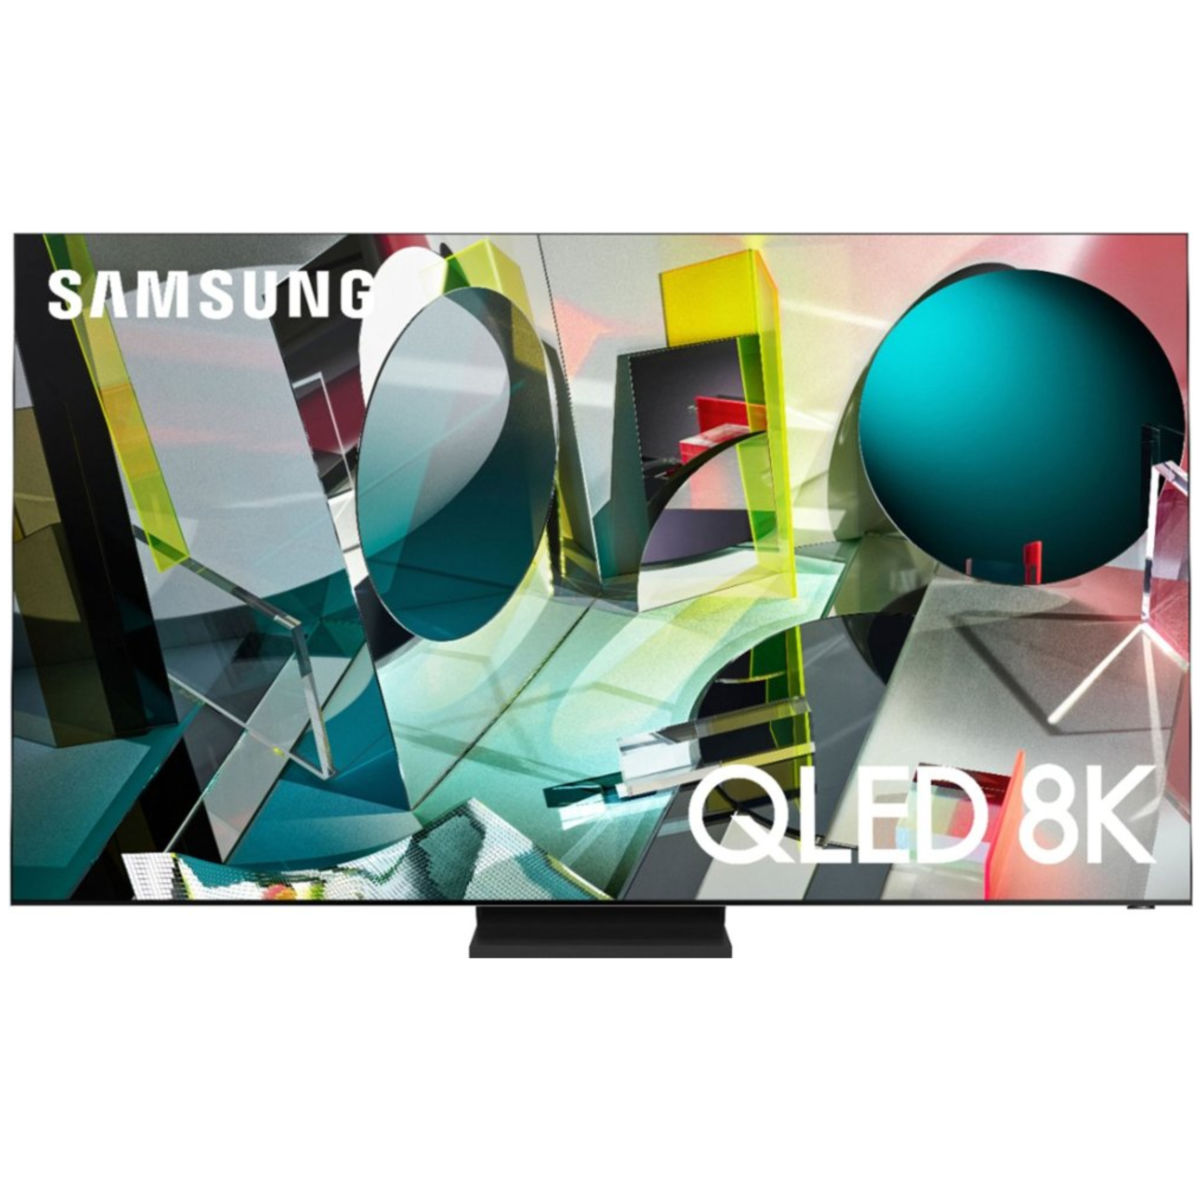 Samsung QN85Q900TSFXZA 85-Inch Q900TS Series 8K Ultra Smart HDTV